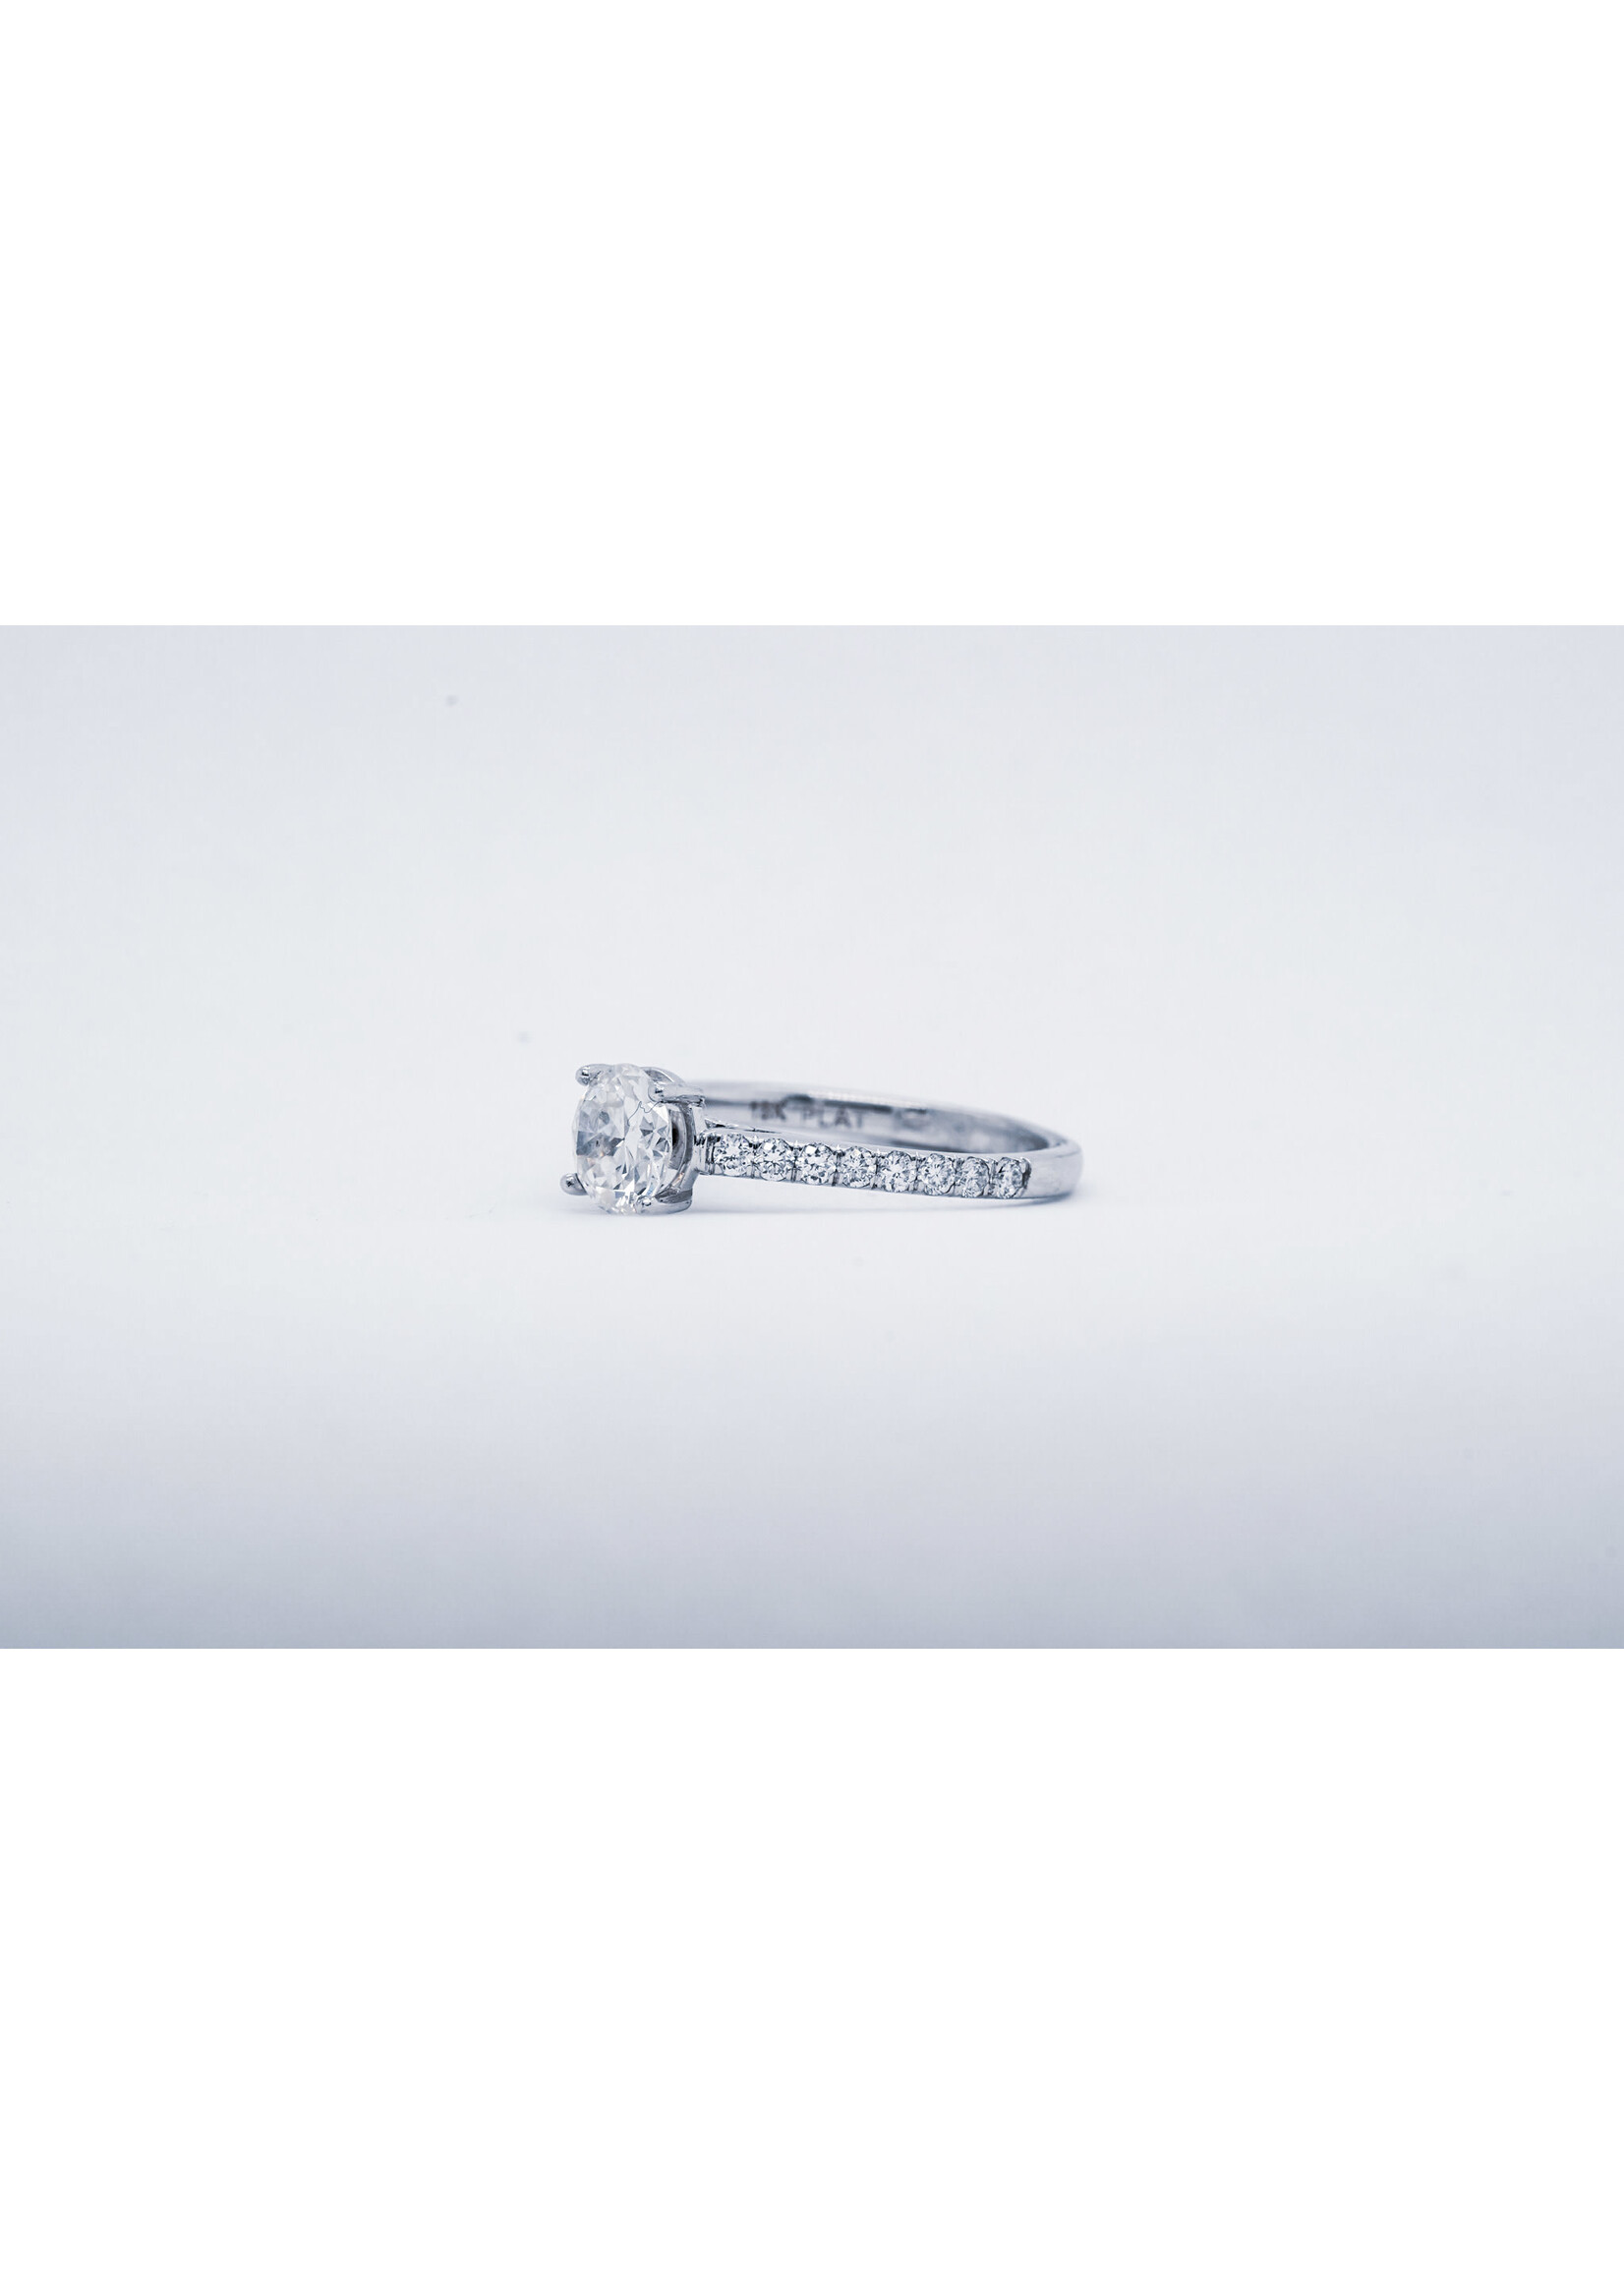 AITT-18KW 3.81g 1.36ctw (.96ctr) H/SI2 Old European Cut Round Diamond Engagement Ring (size 6.75)